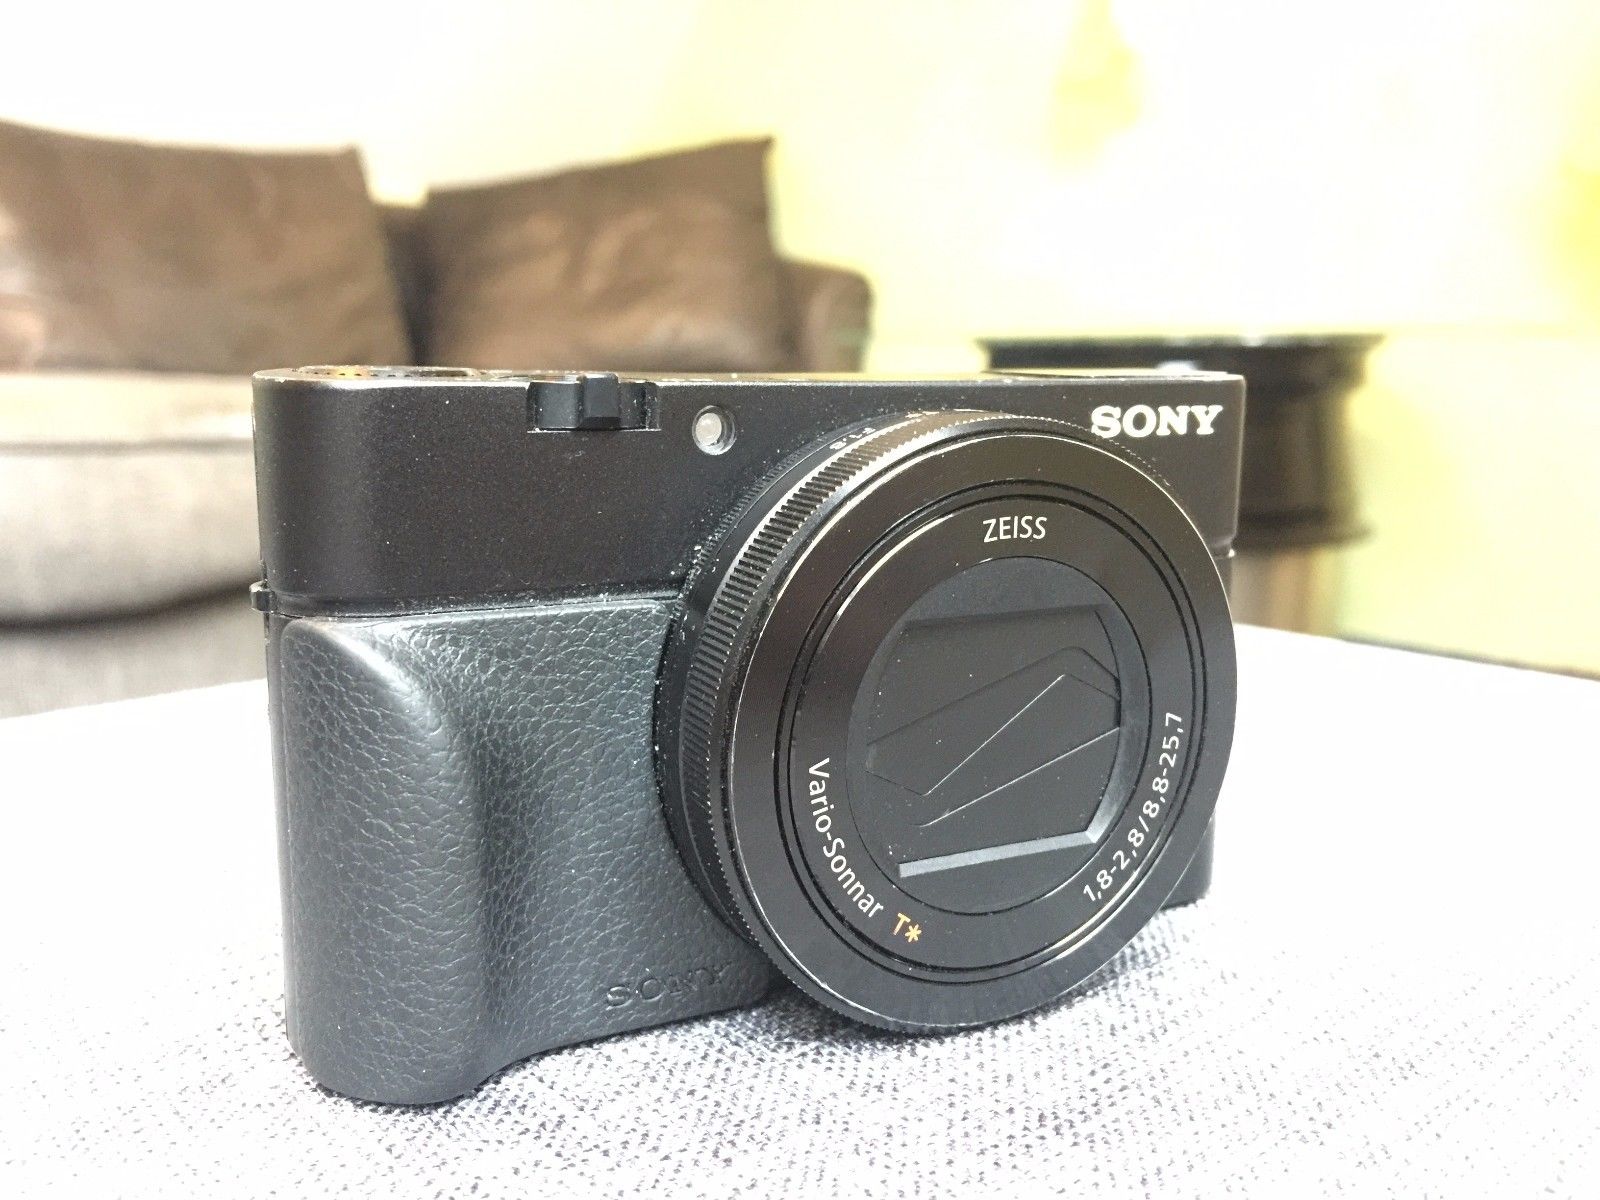 Sony DSC-RX 100 III M3 - Klappdisplay - Selfie Cam für YouTube